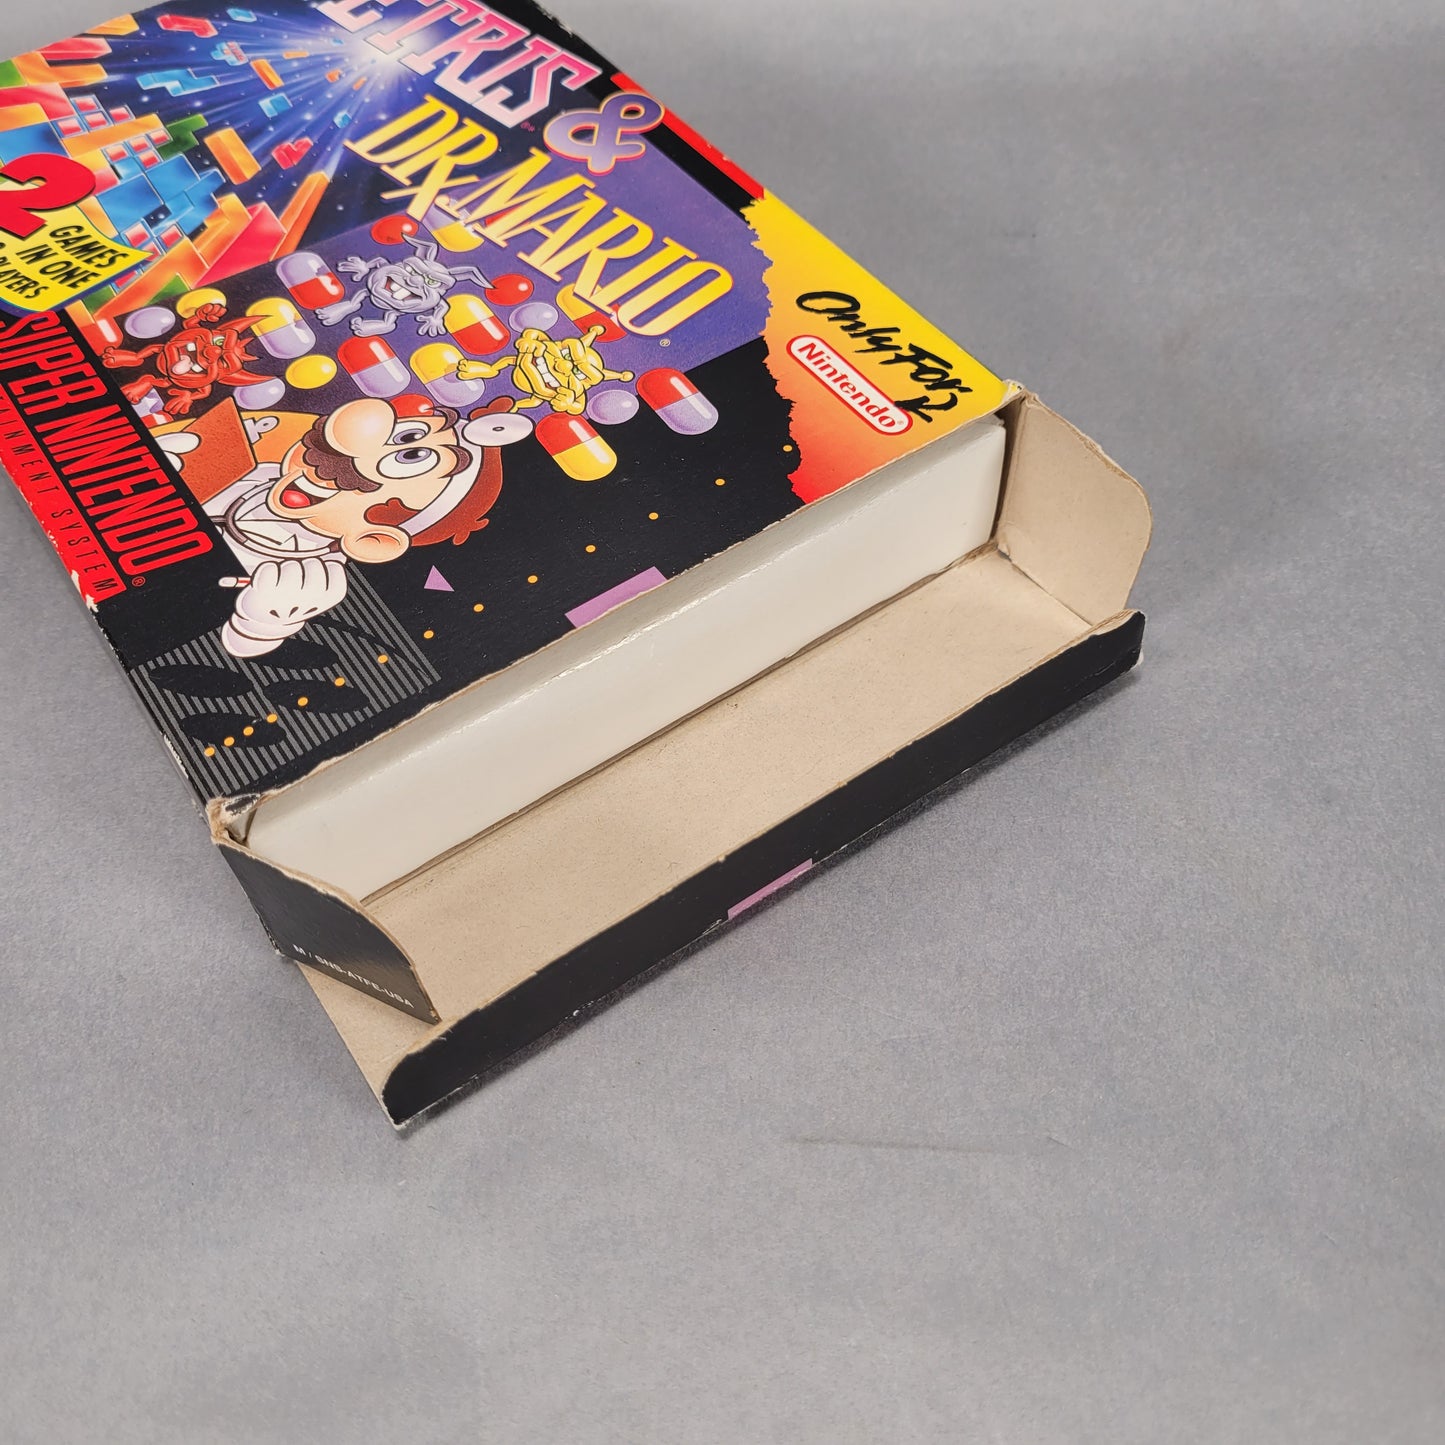 Tetris & Dr. Mario for Super Nintendo Complete in Box